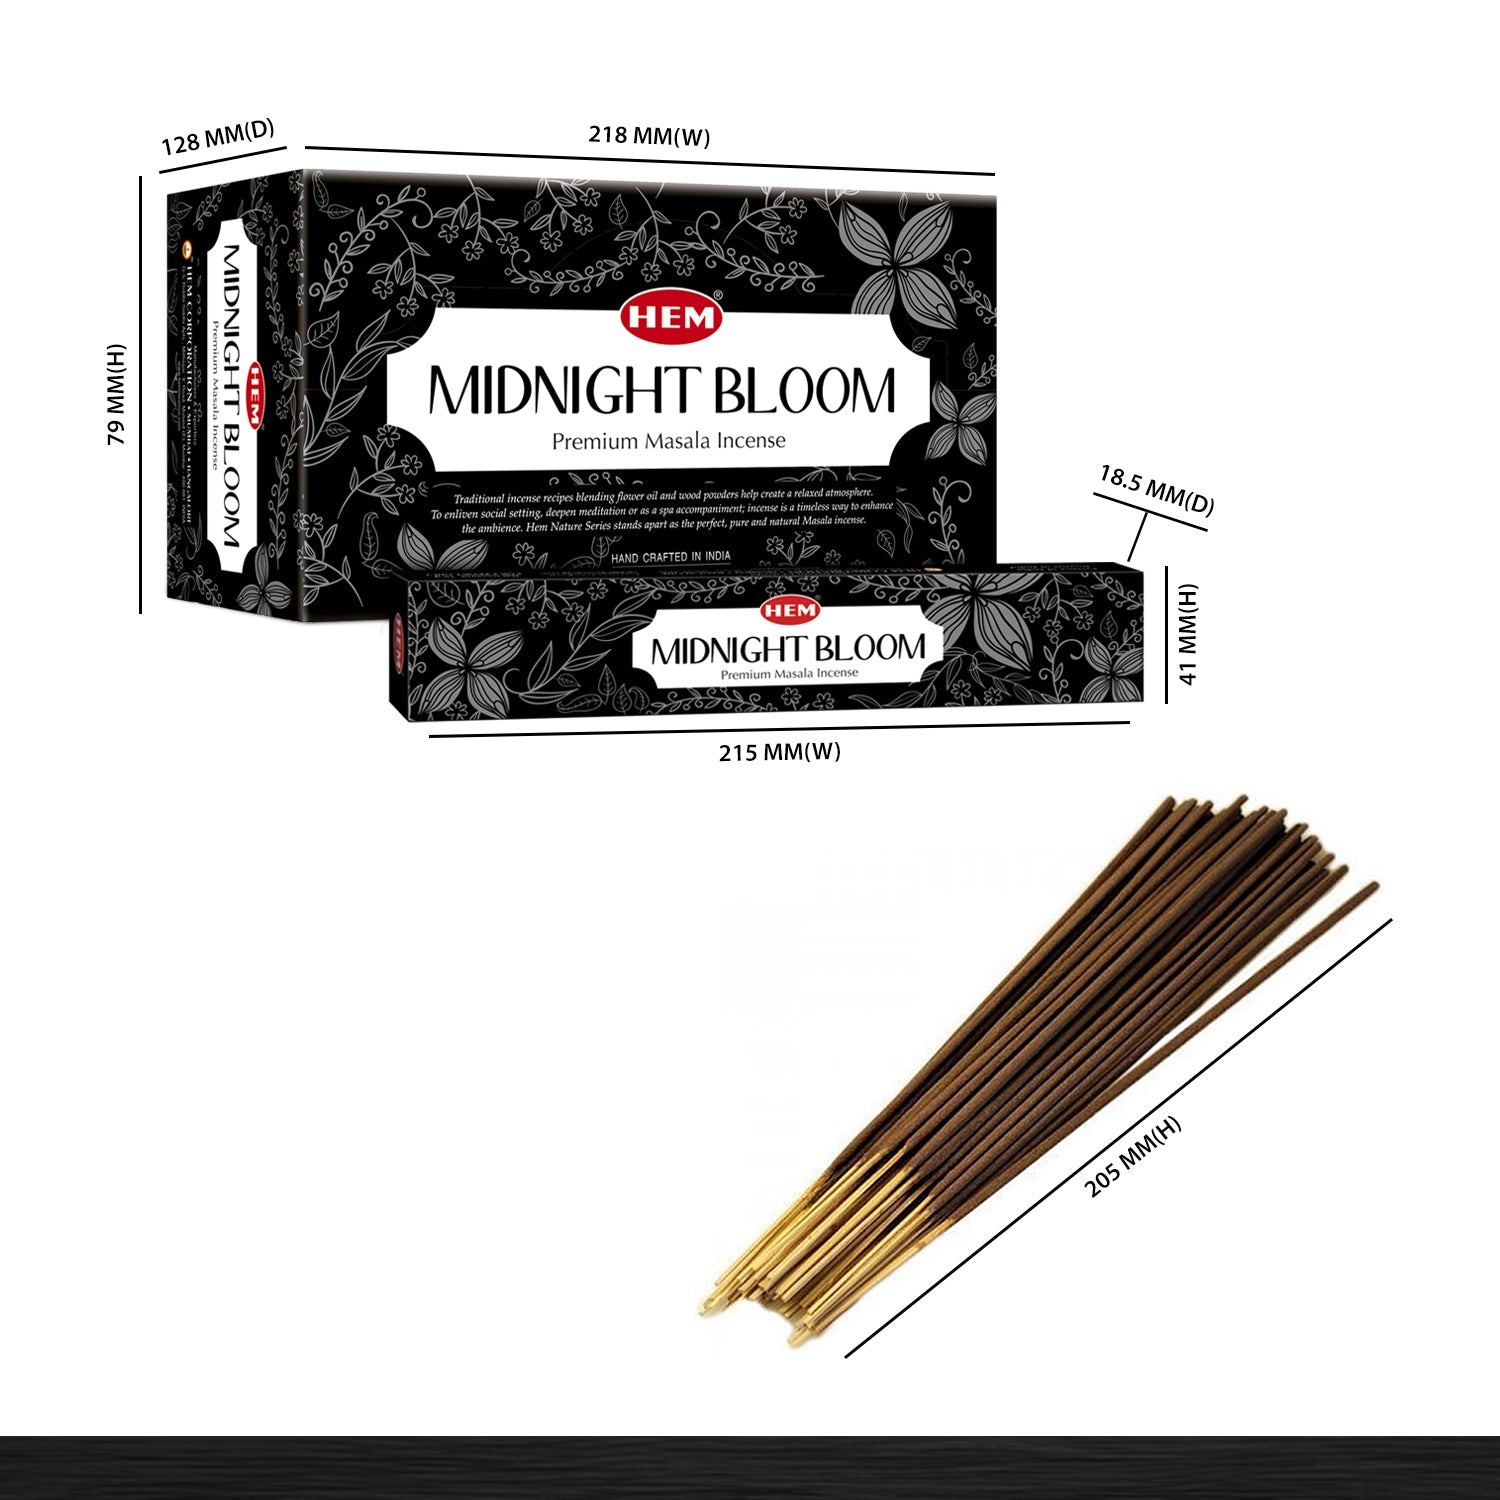 hem-midnight-bloom-premium-masala-incense-sticks-size